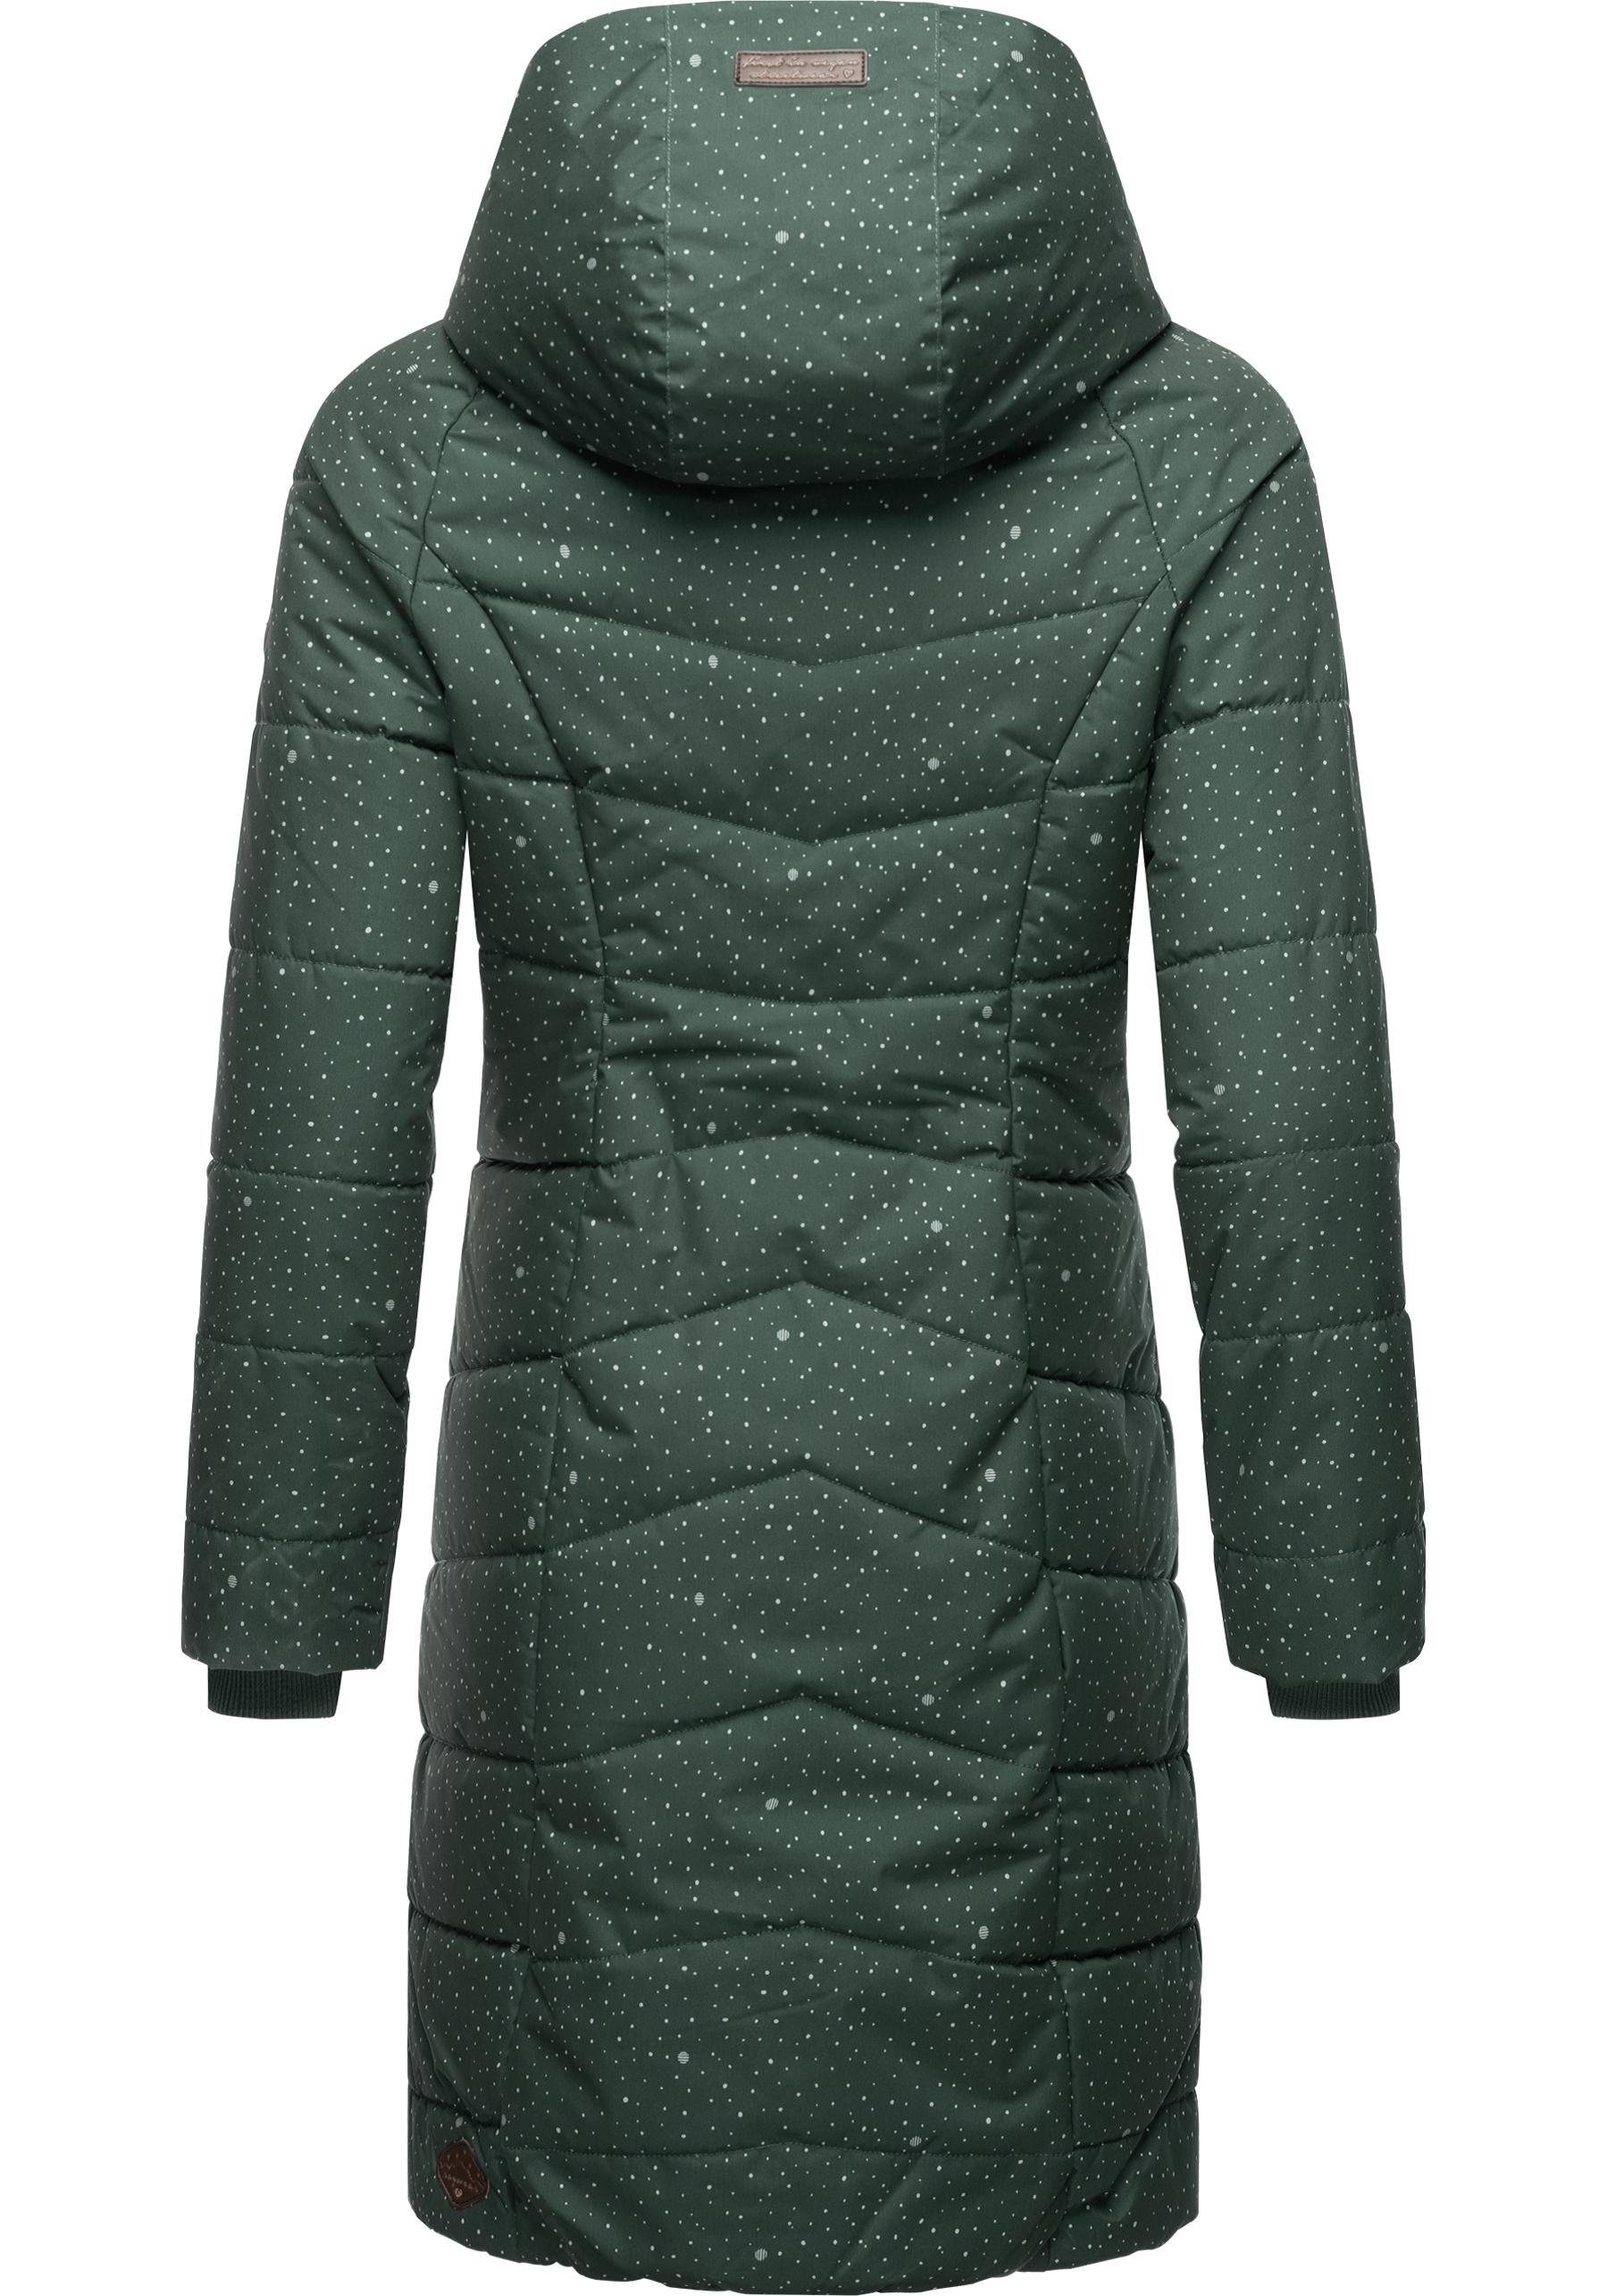 gesteppter Steppmantel dunkelgrün Dizzie Ragwear mit Print Kapuze Winterparka stylischer, Coat